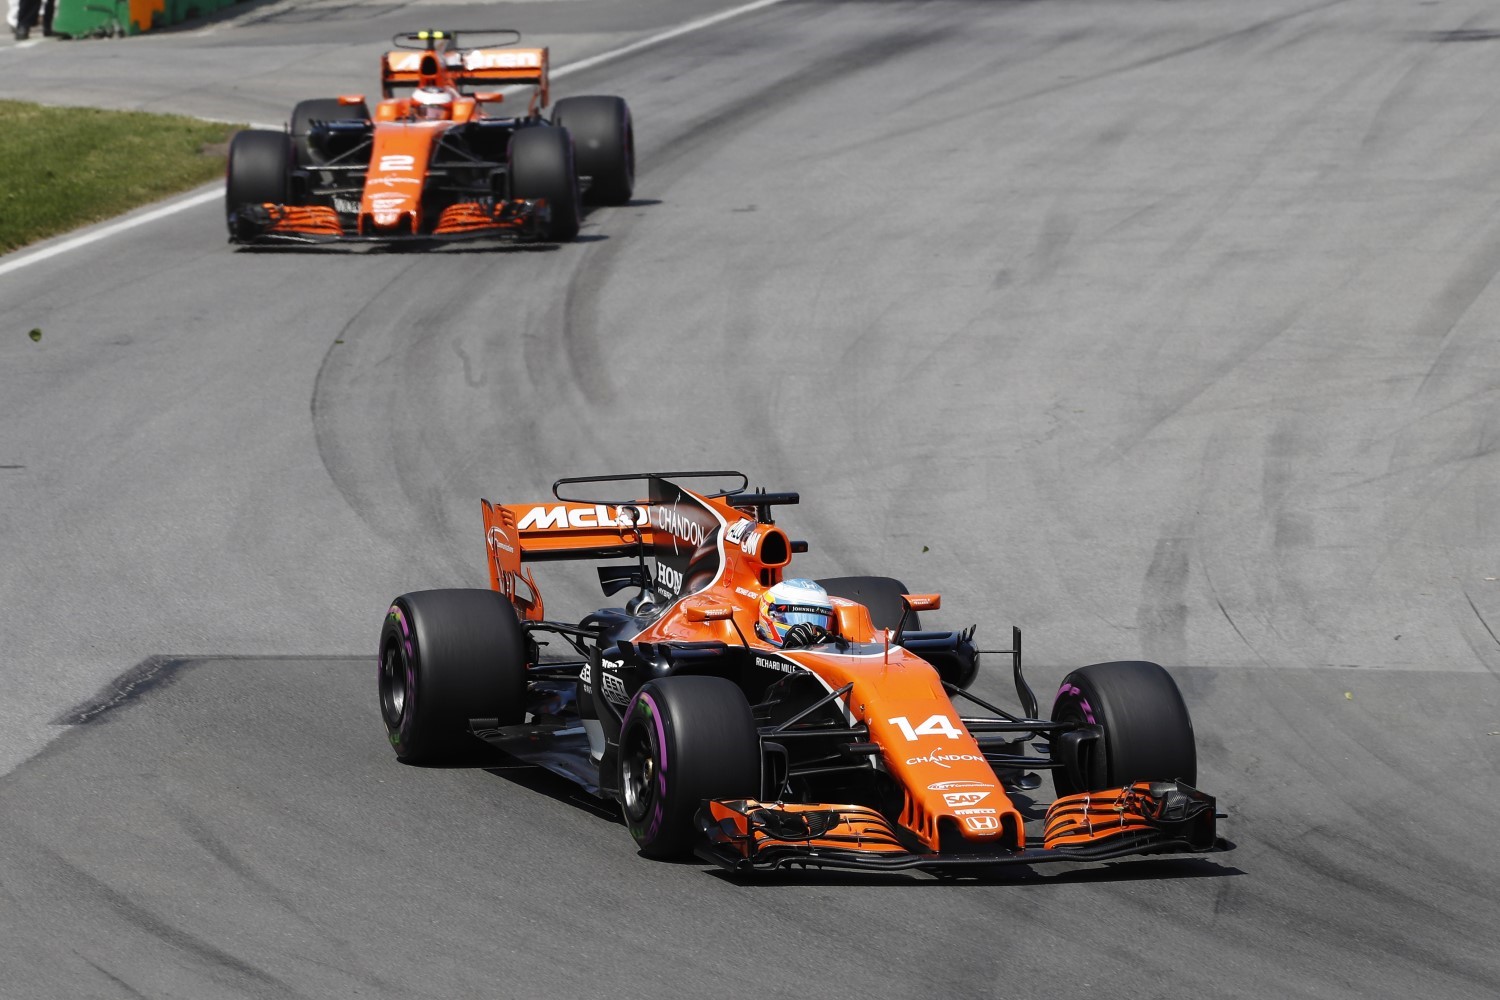 The McLaren-Hondas